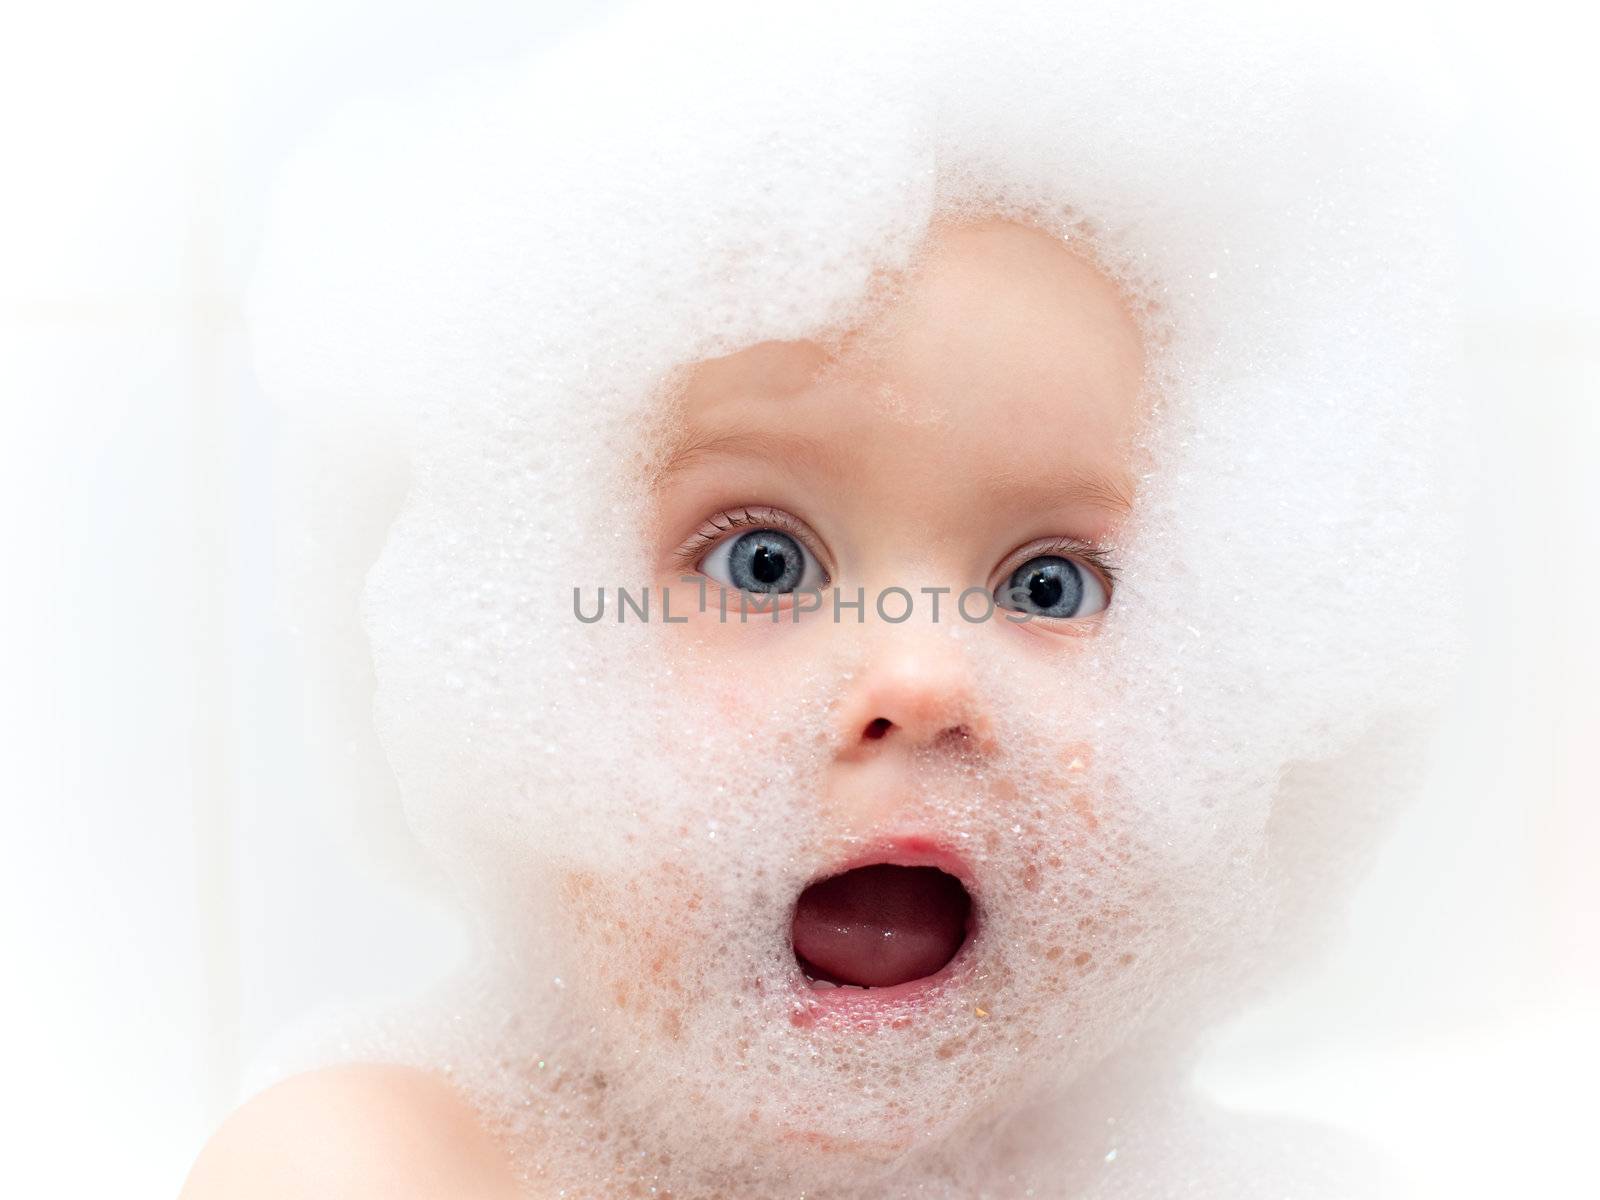 Baby bathing by naumoid